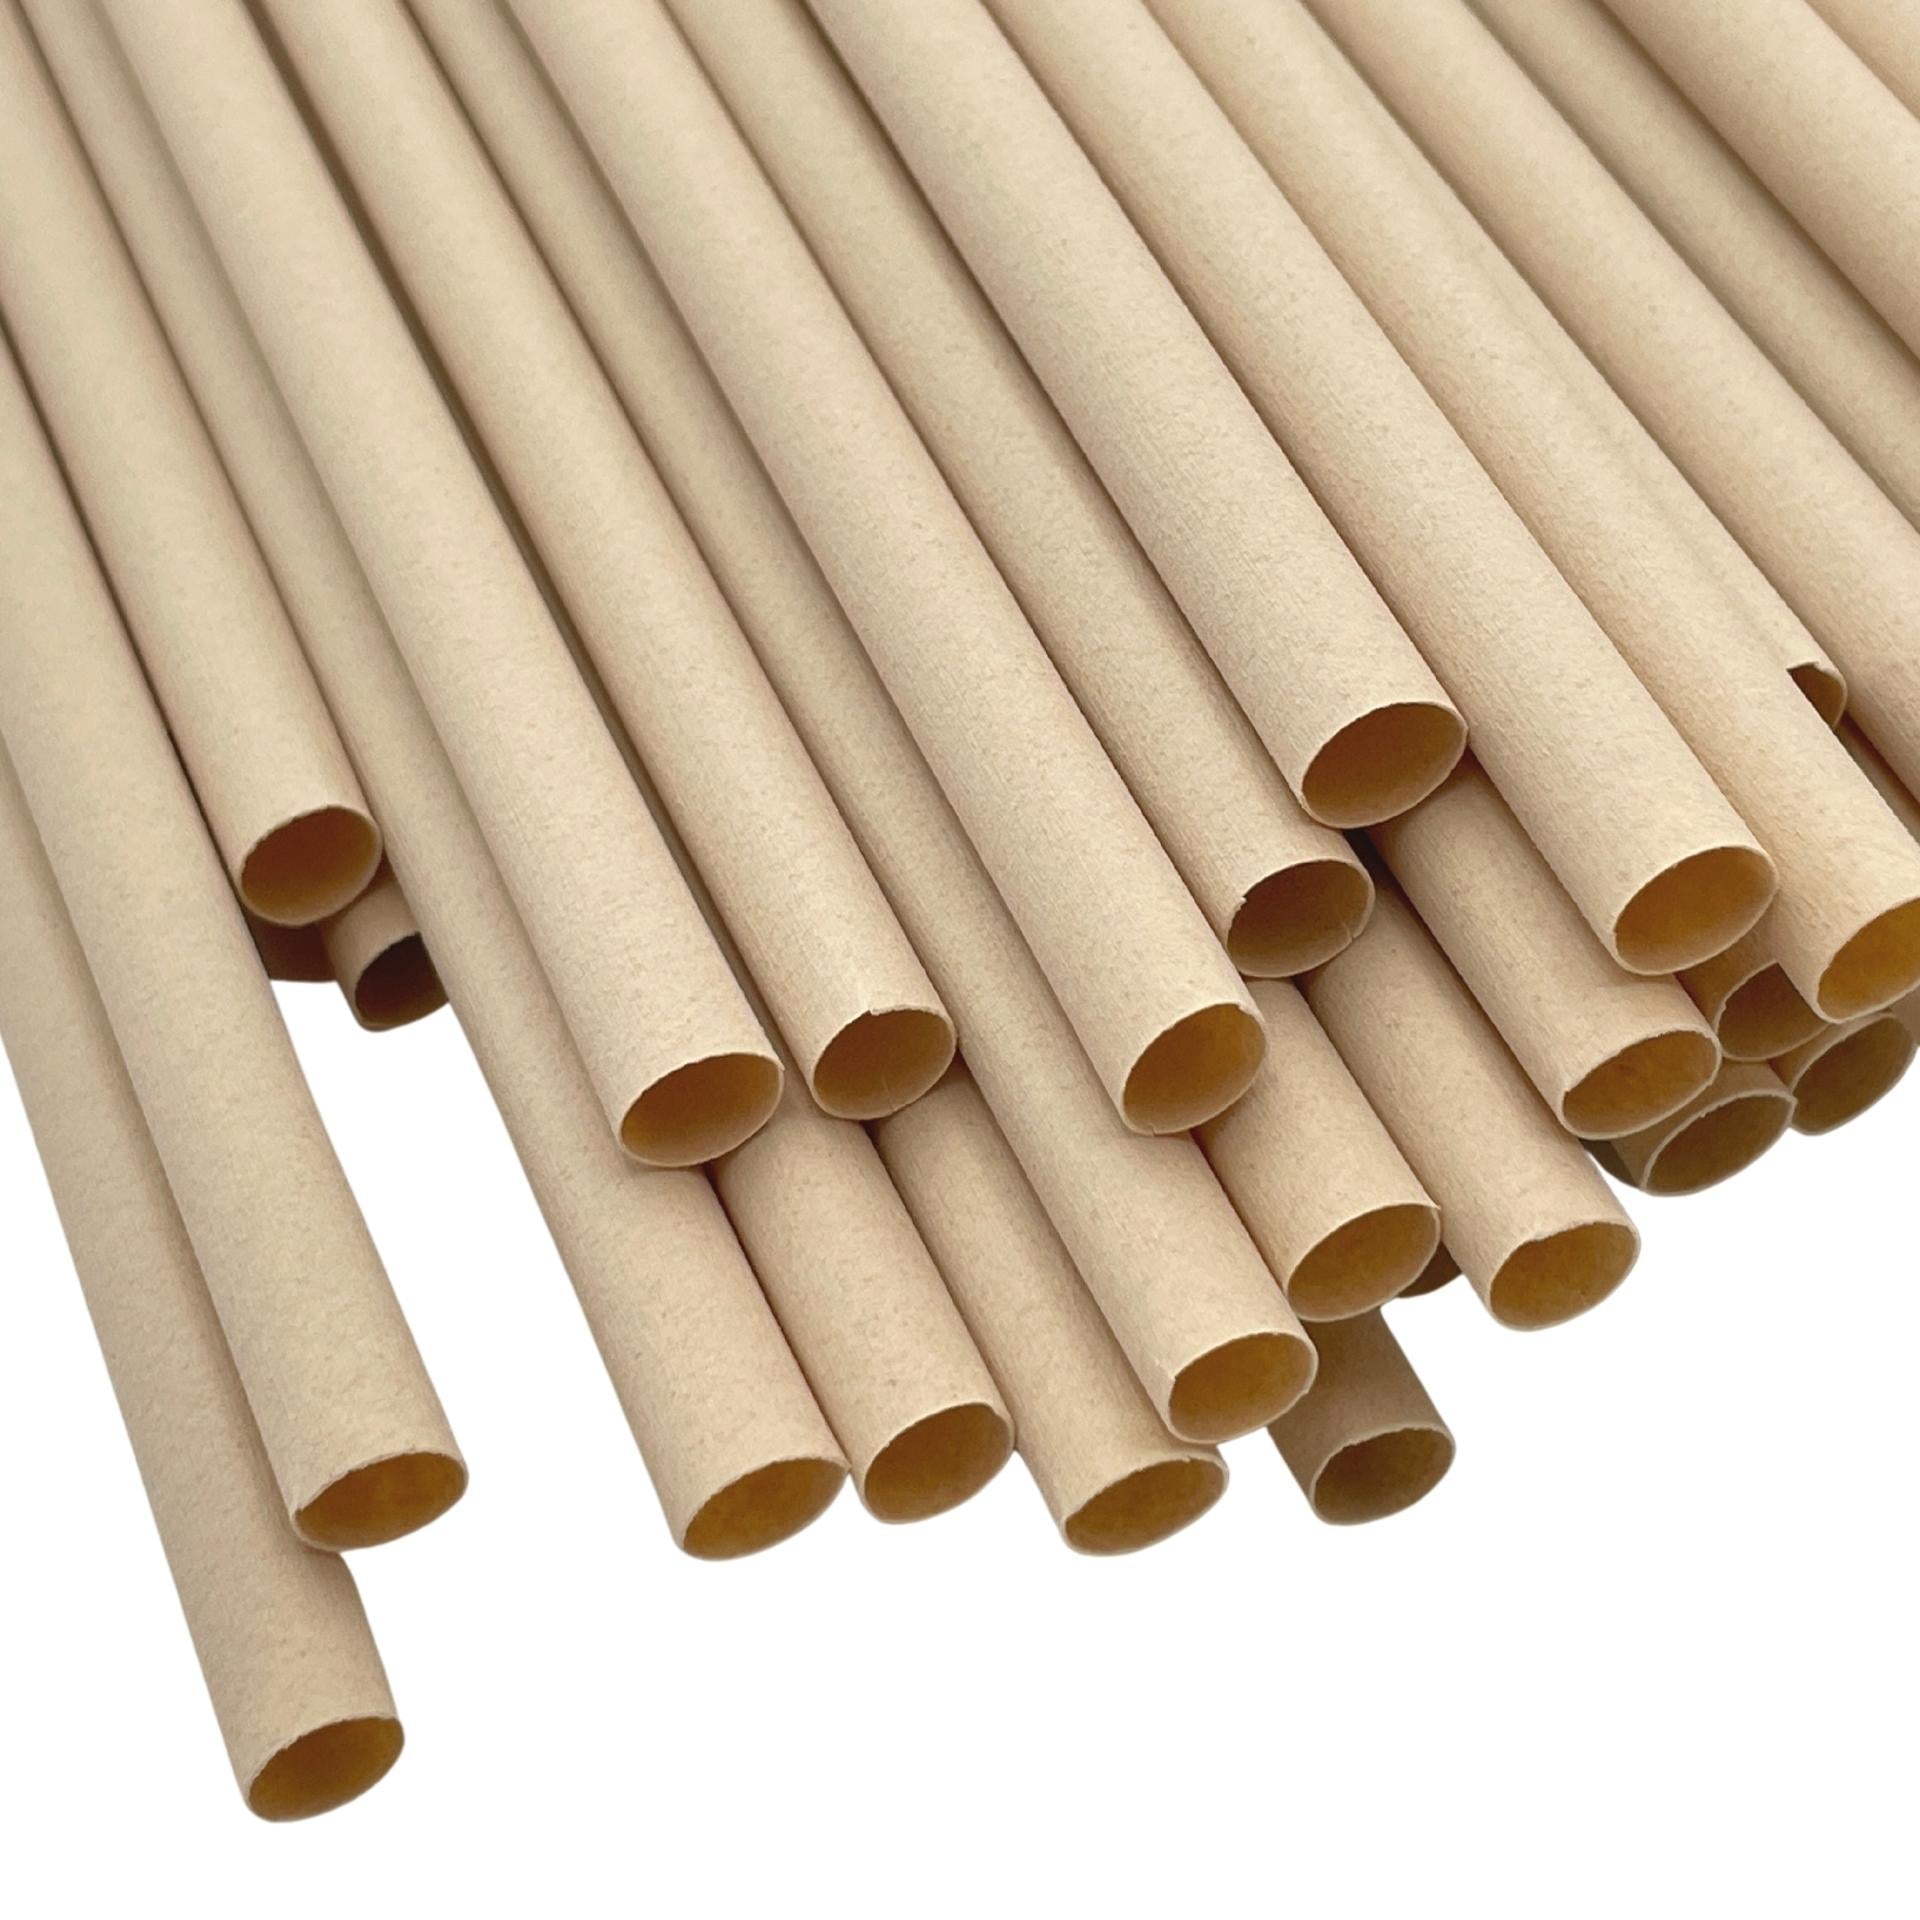 CHANYI Bamboo Straws 6mm - 100% Compostable Plant-Based Bamboo Fiber